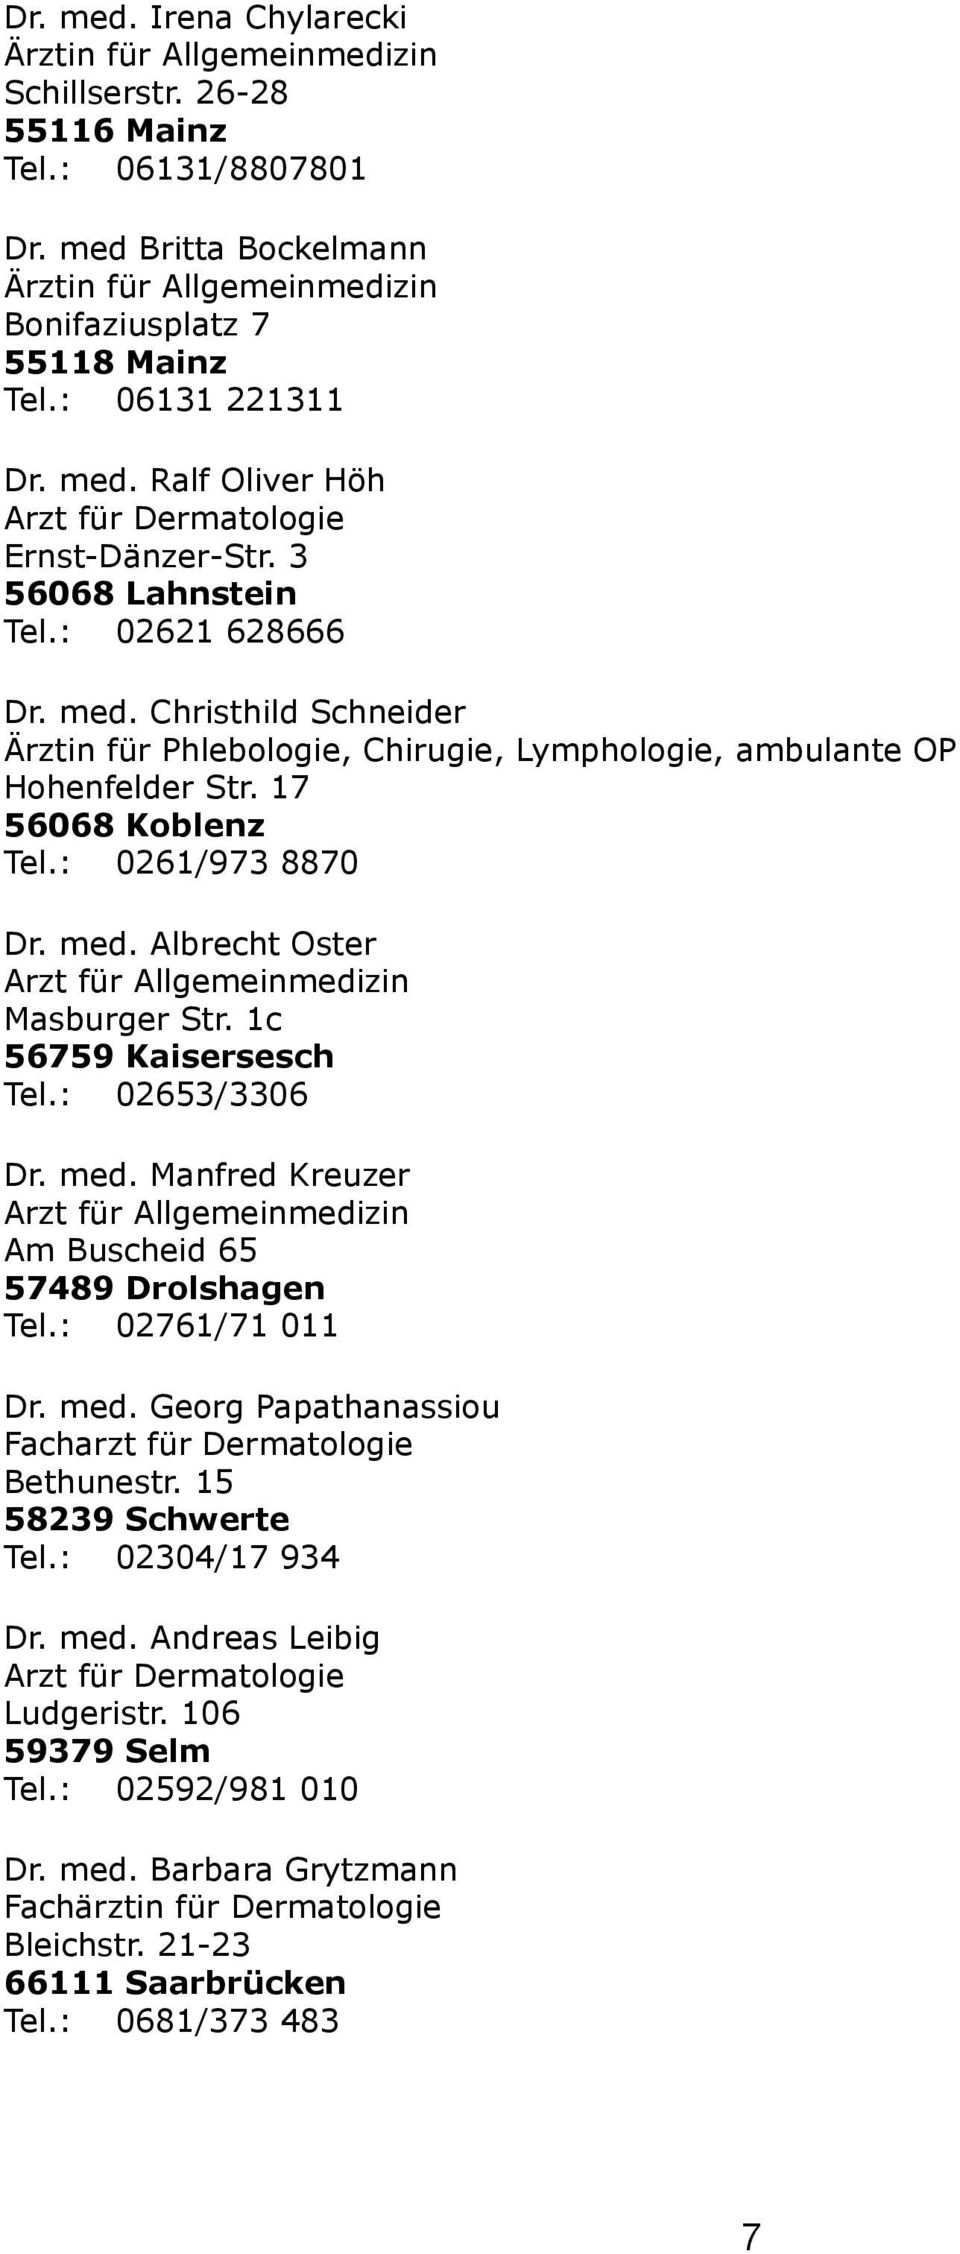 1c 56759 Kaisersesch Tel.: 02653/3306 Dr. med. Manfred Kreuzer Am Buscheid 65 57489 Drolshagen Tel.: 02761/71 011 Dr. med. Georg Papathanassiou Facharzt für Dermatologie Bethunestr.